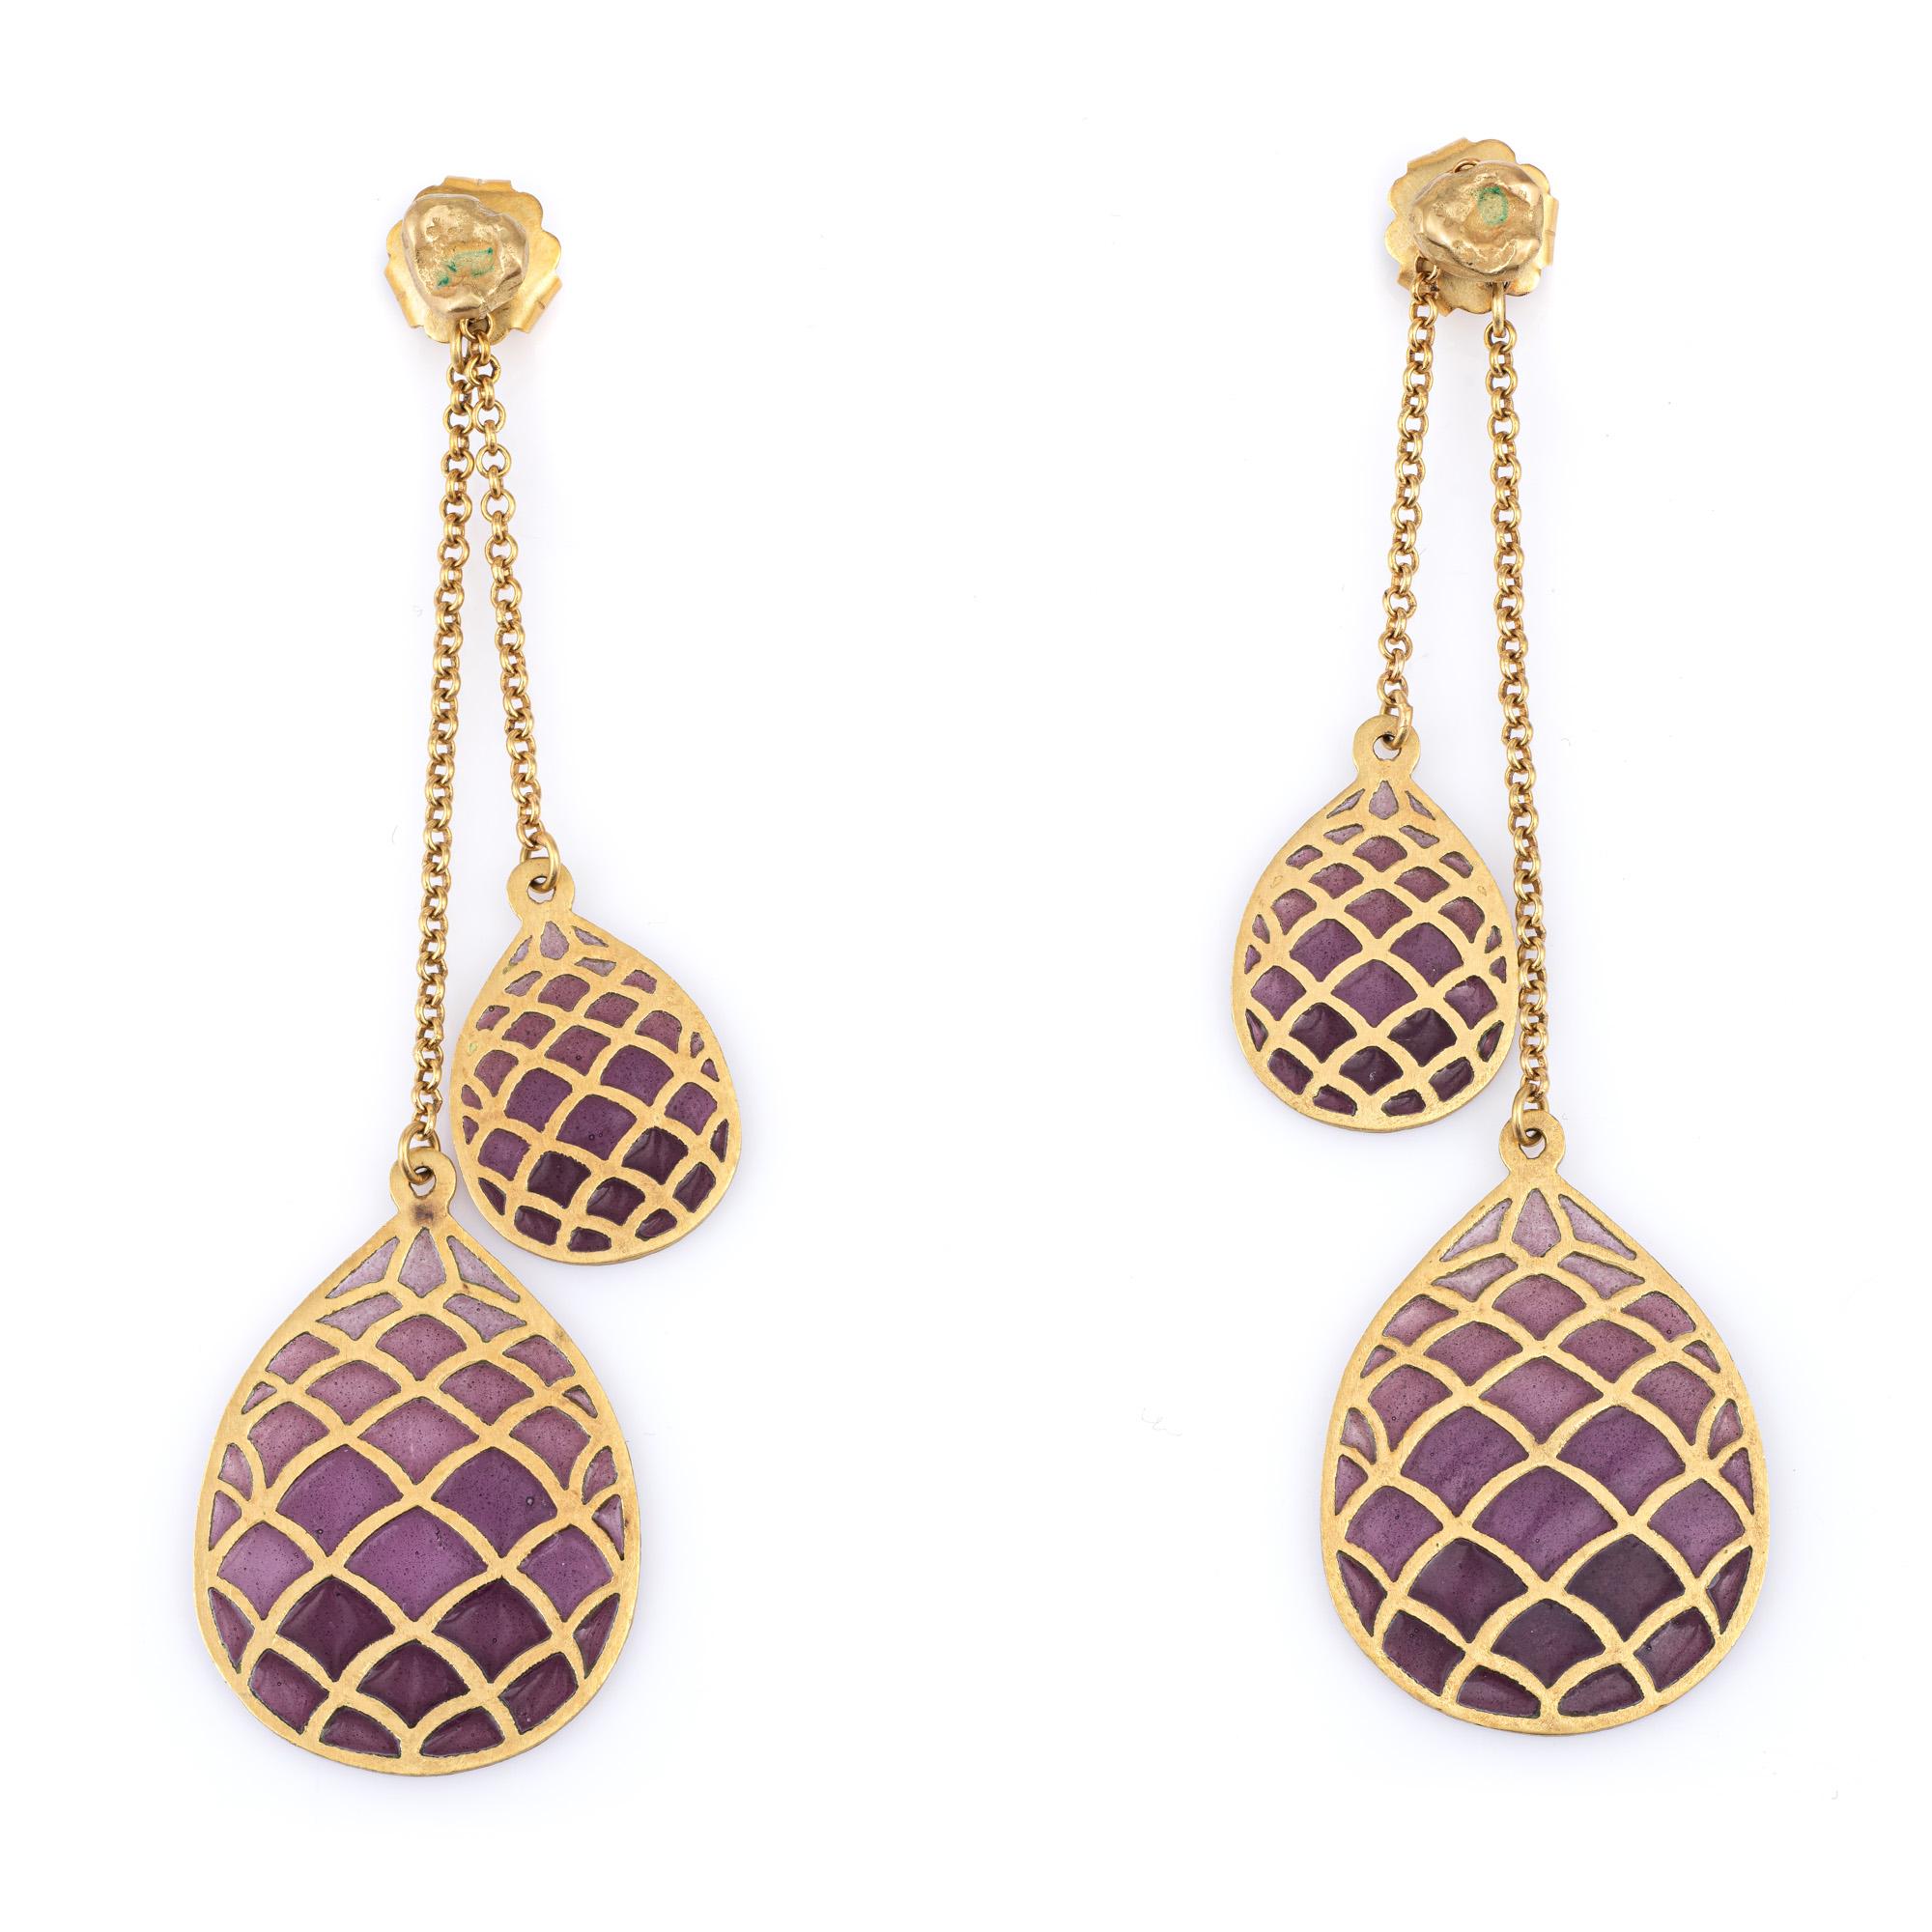 Plique a Jour Enamel Earrings Estate 18k Yellow Gold Drops Fine Jewelry In Good Condition For Sale In Torrance, CA